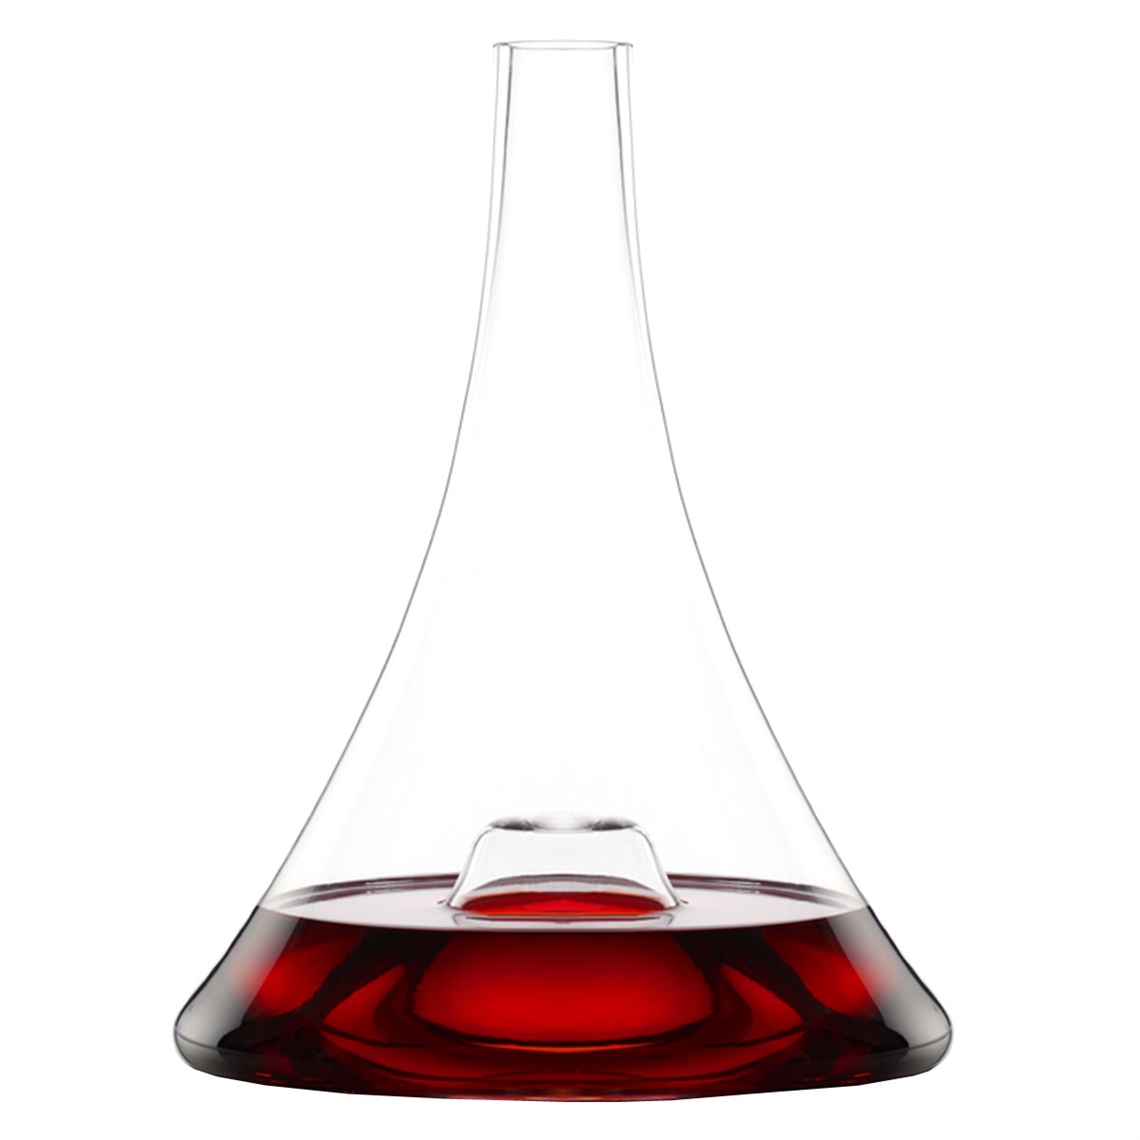 Stolzle Vulkanos Erebus Red Wine Decanter 1500ml